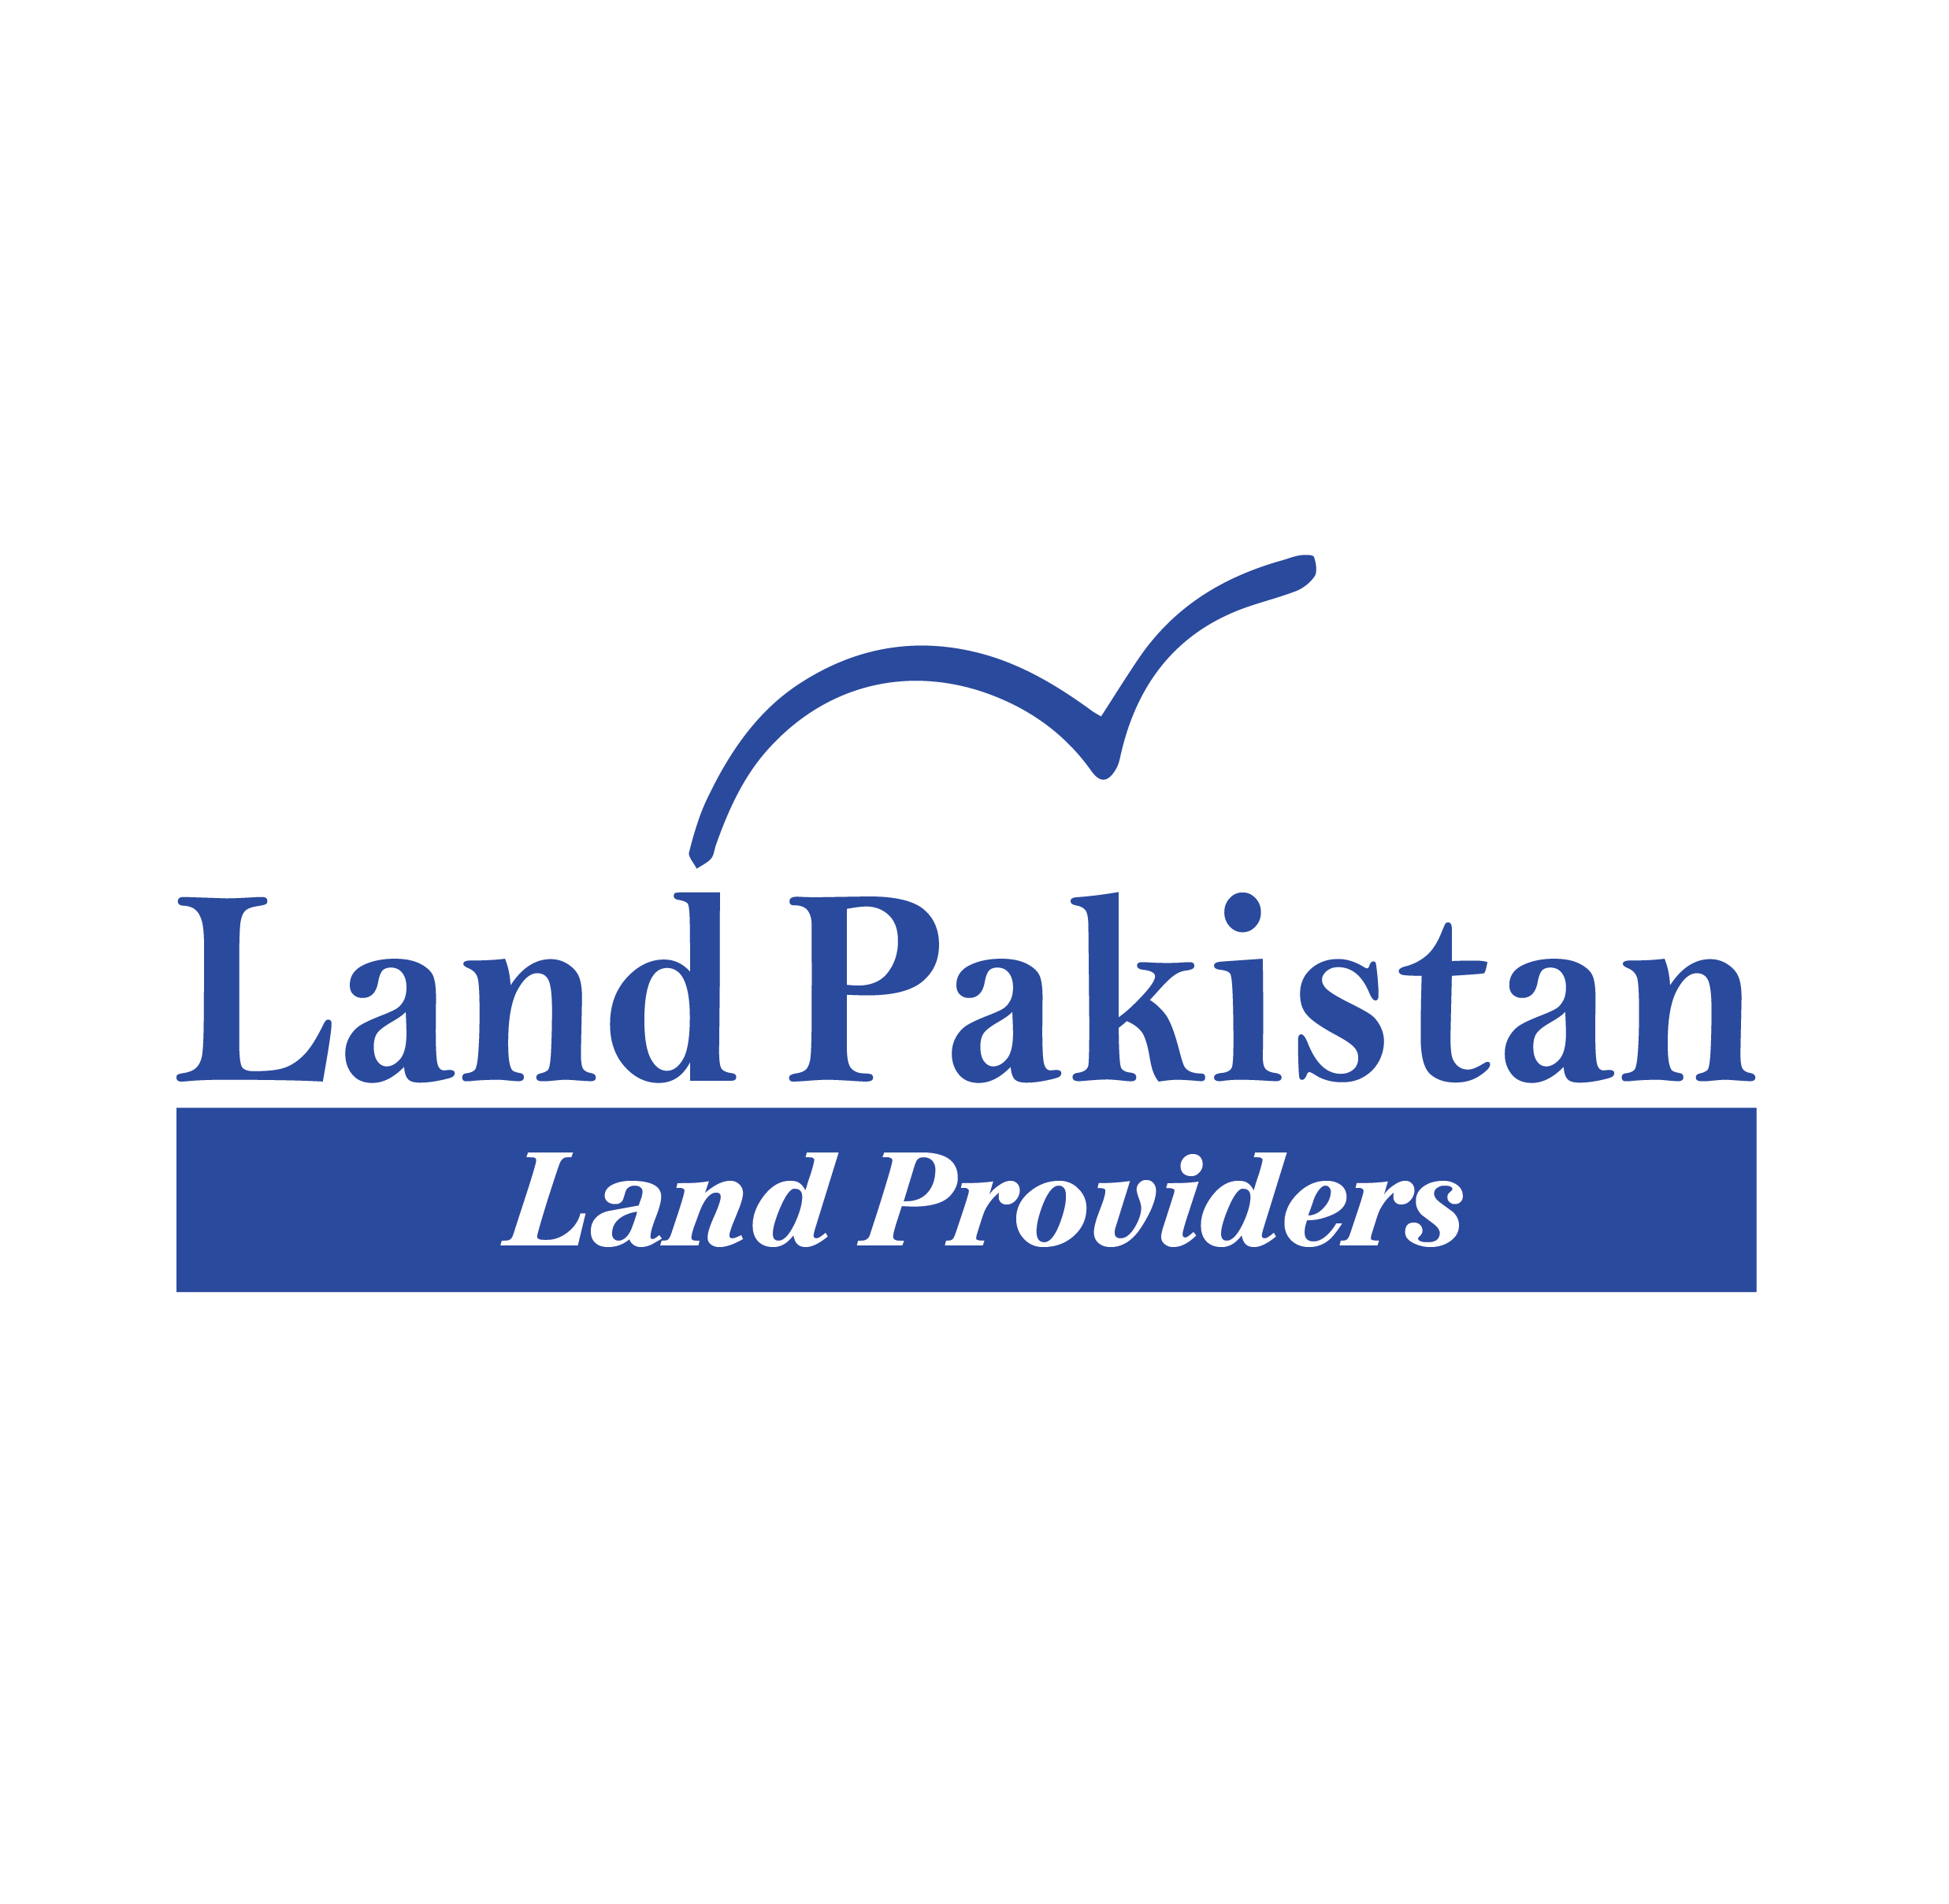 Land Pakistan Land Providers